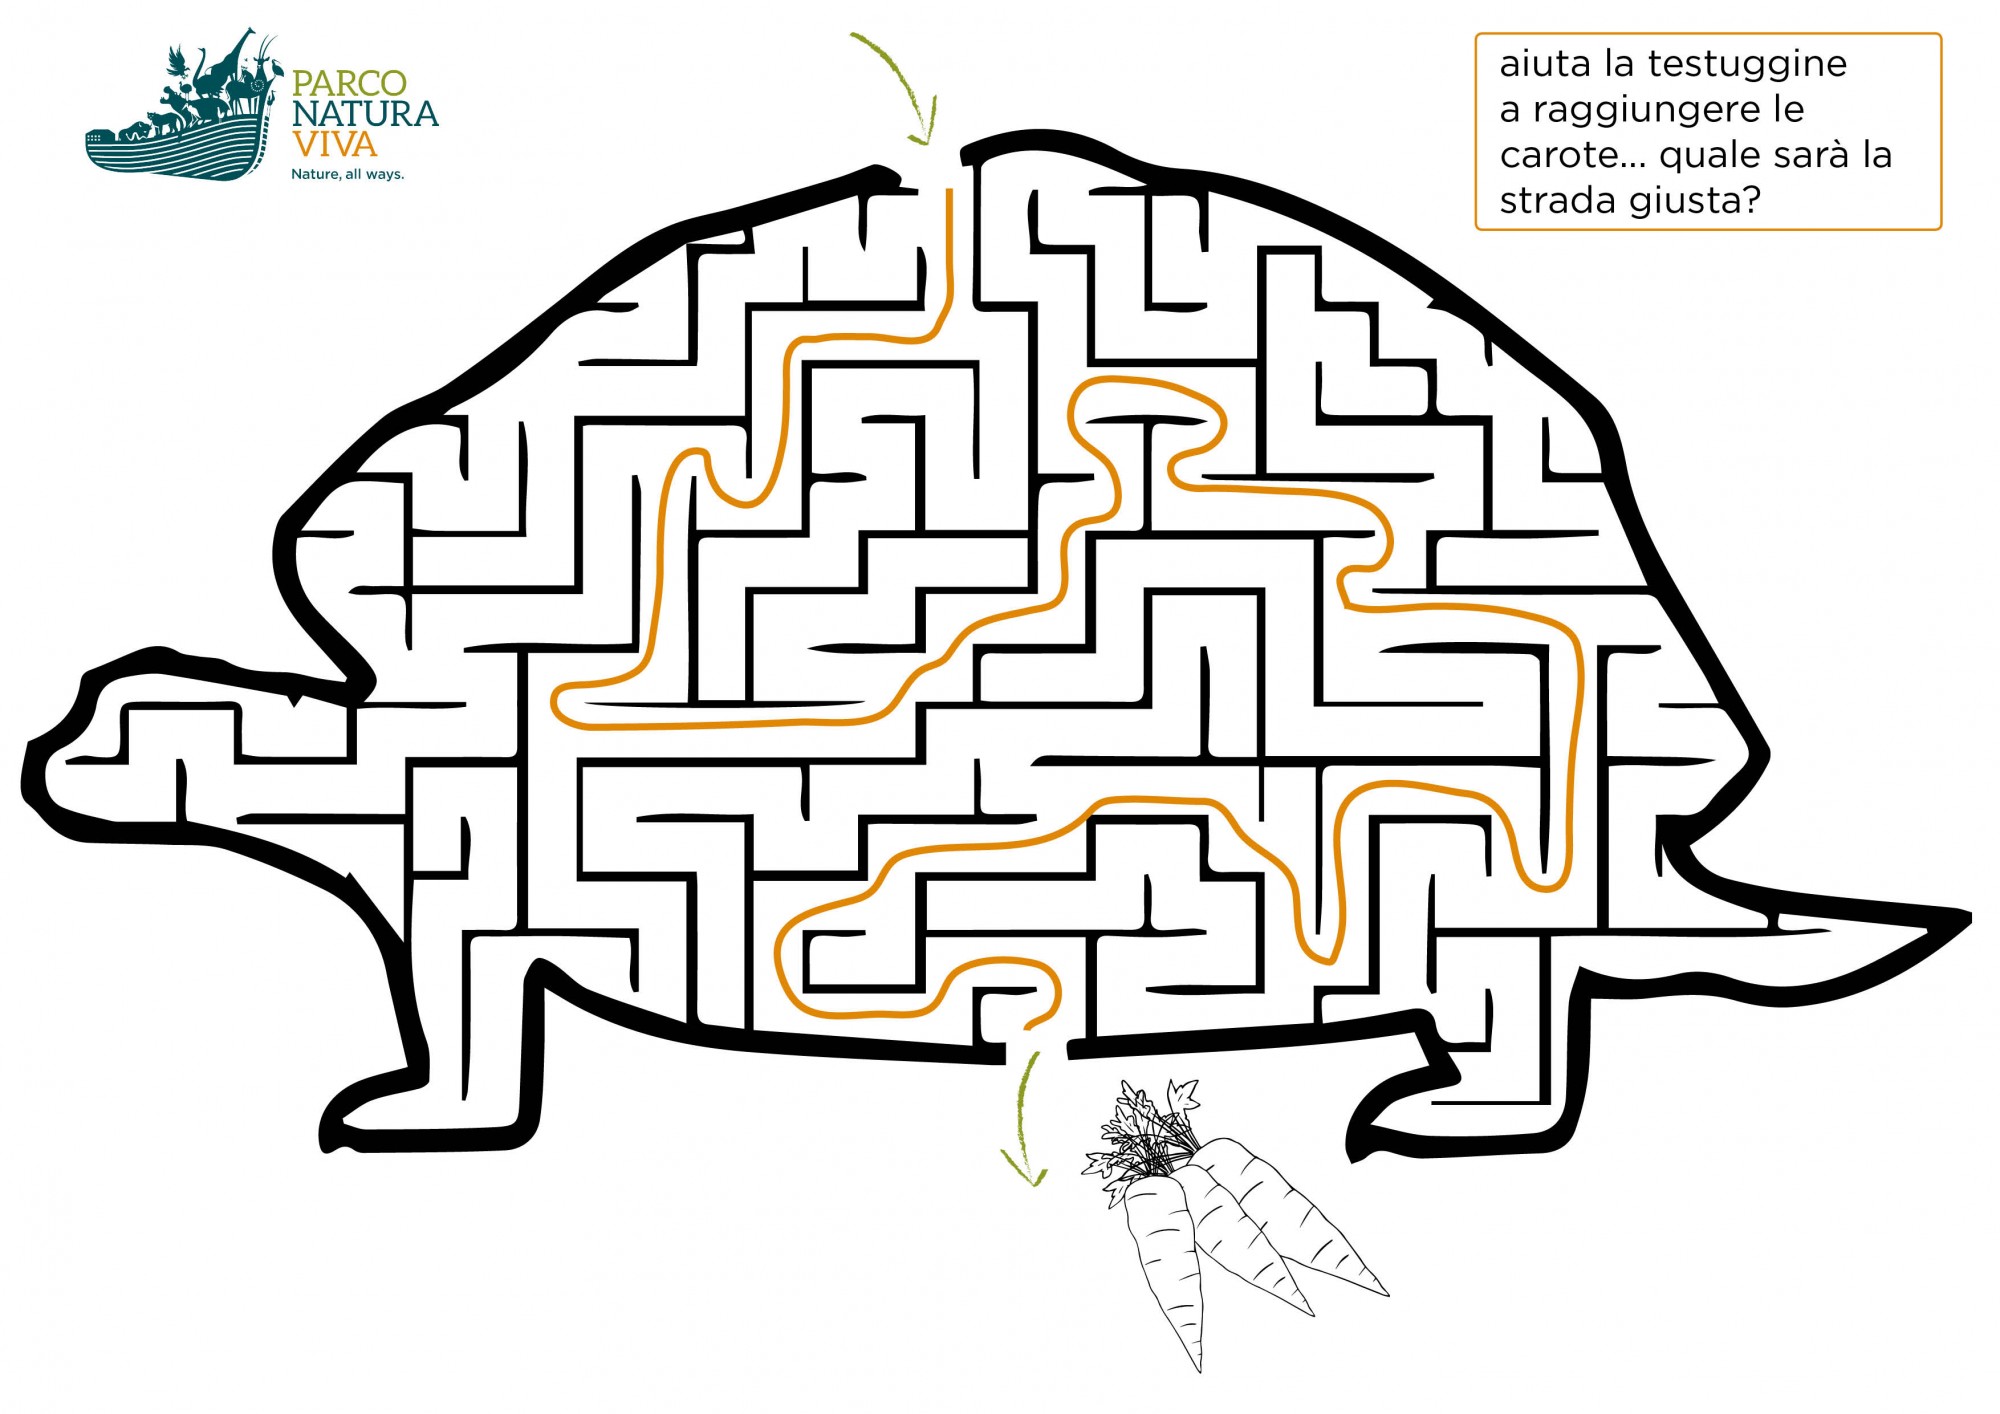 labirinto-tartaruga-soluzione.jpg